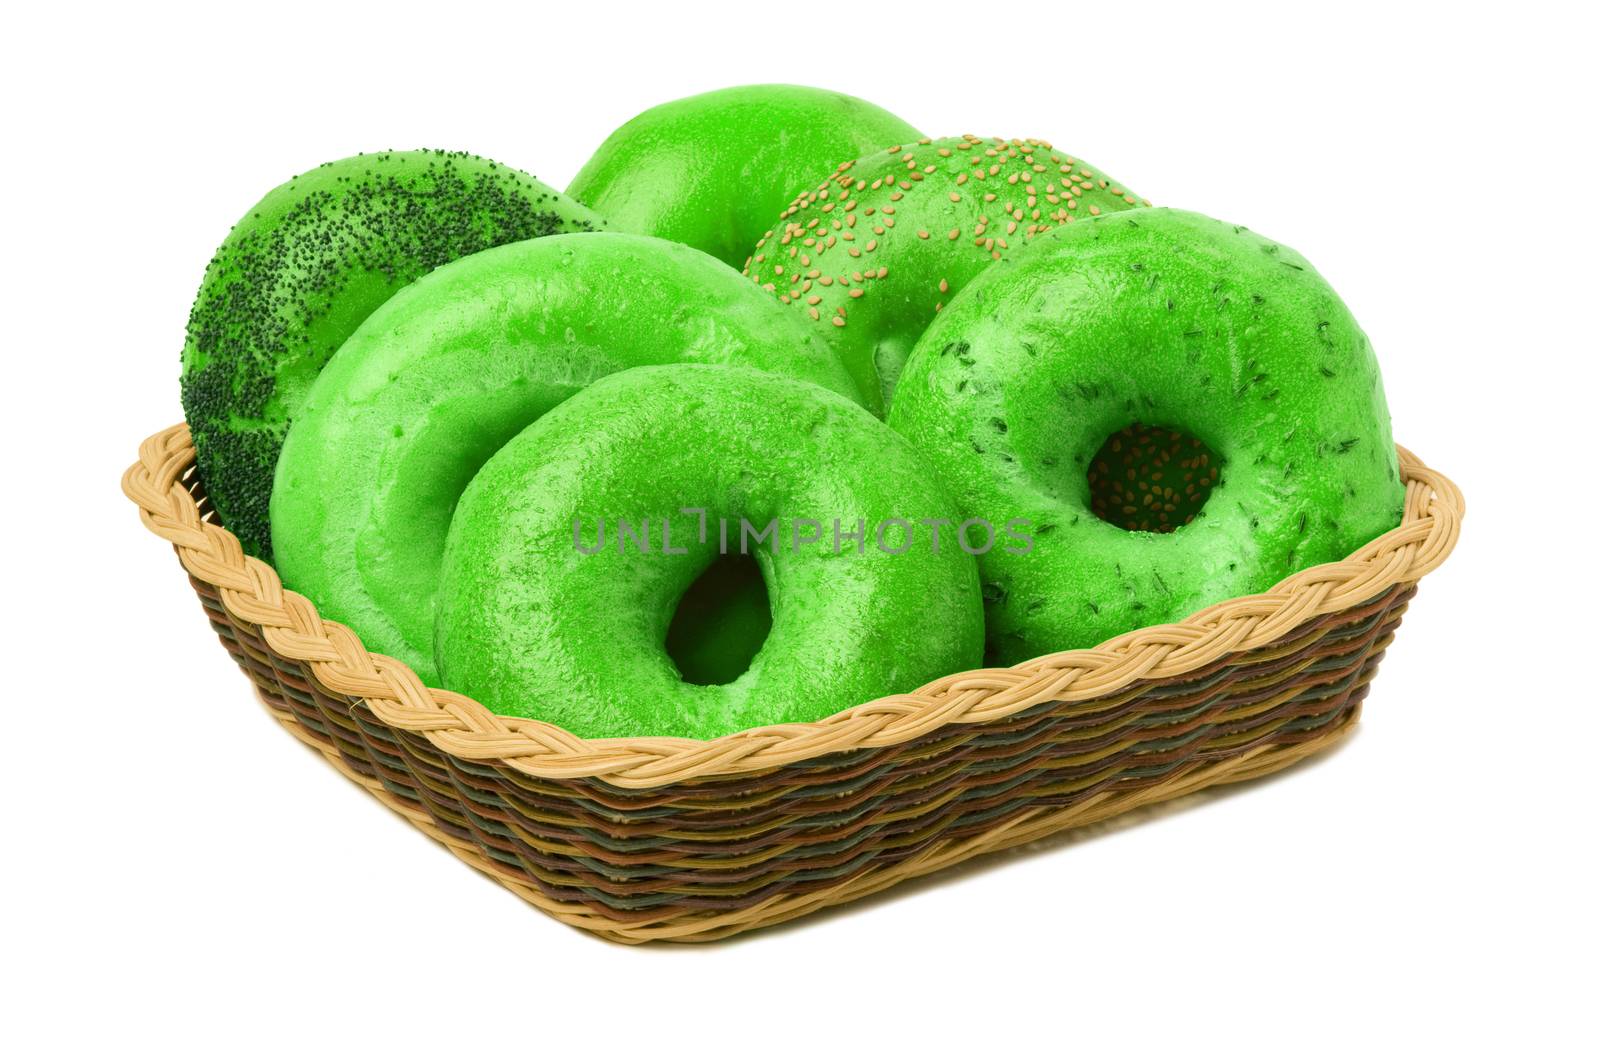 Six Green Bagels in a Basket by Balefire9